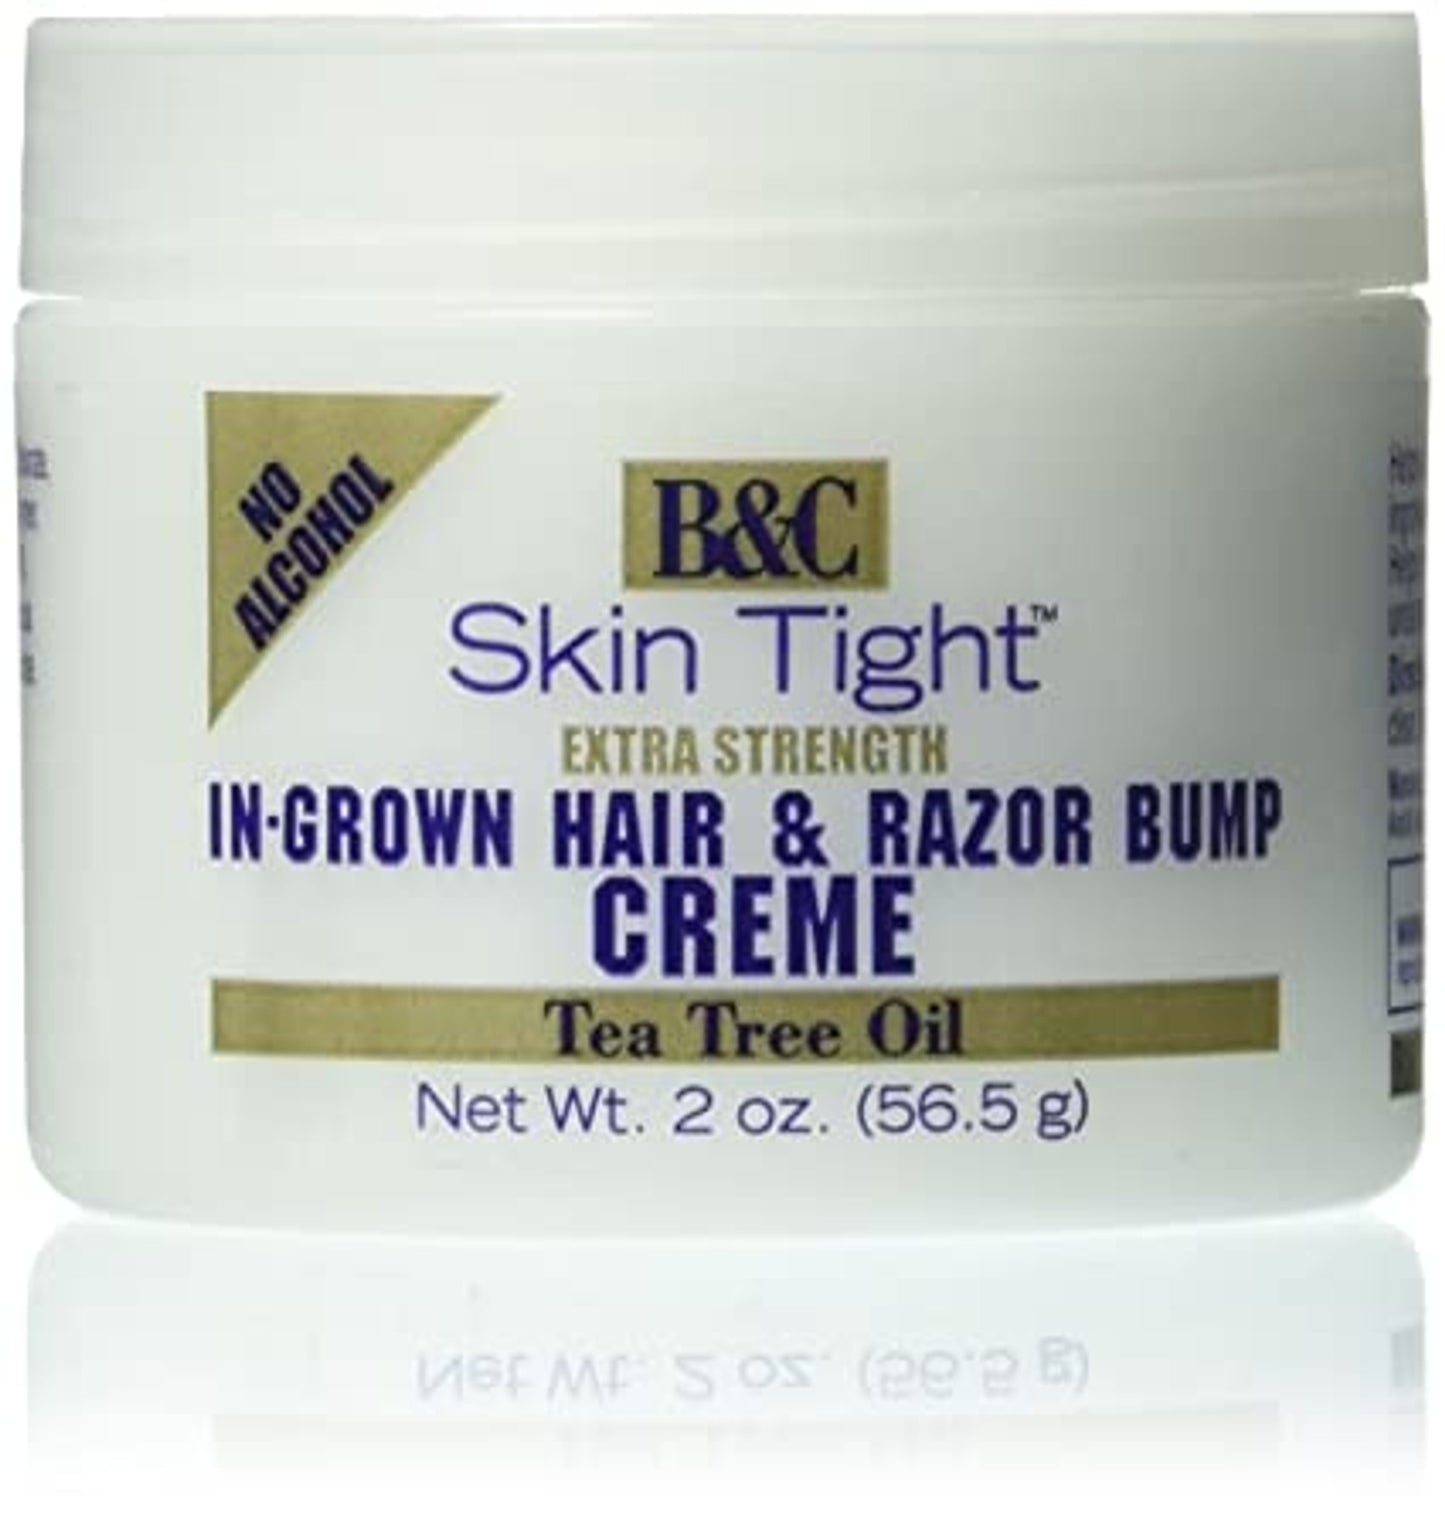 B&C Skin Tight Extra Strength In-Grown Hair and Razor Bump Creme - Tea Tree Oil - 2oz